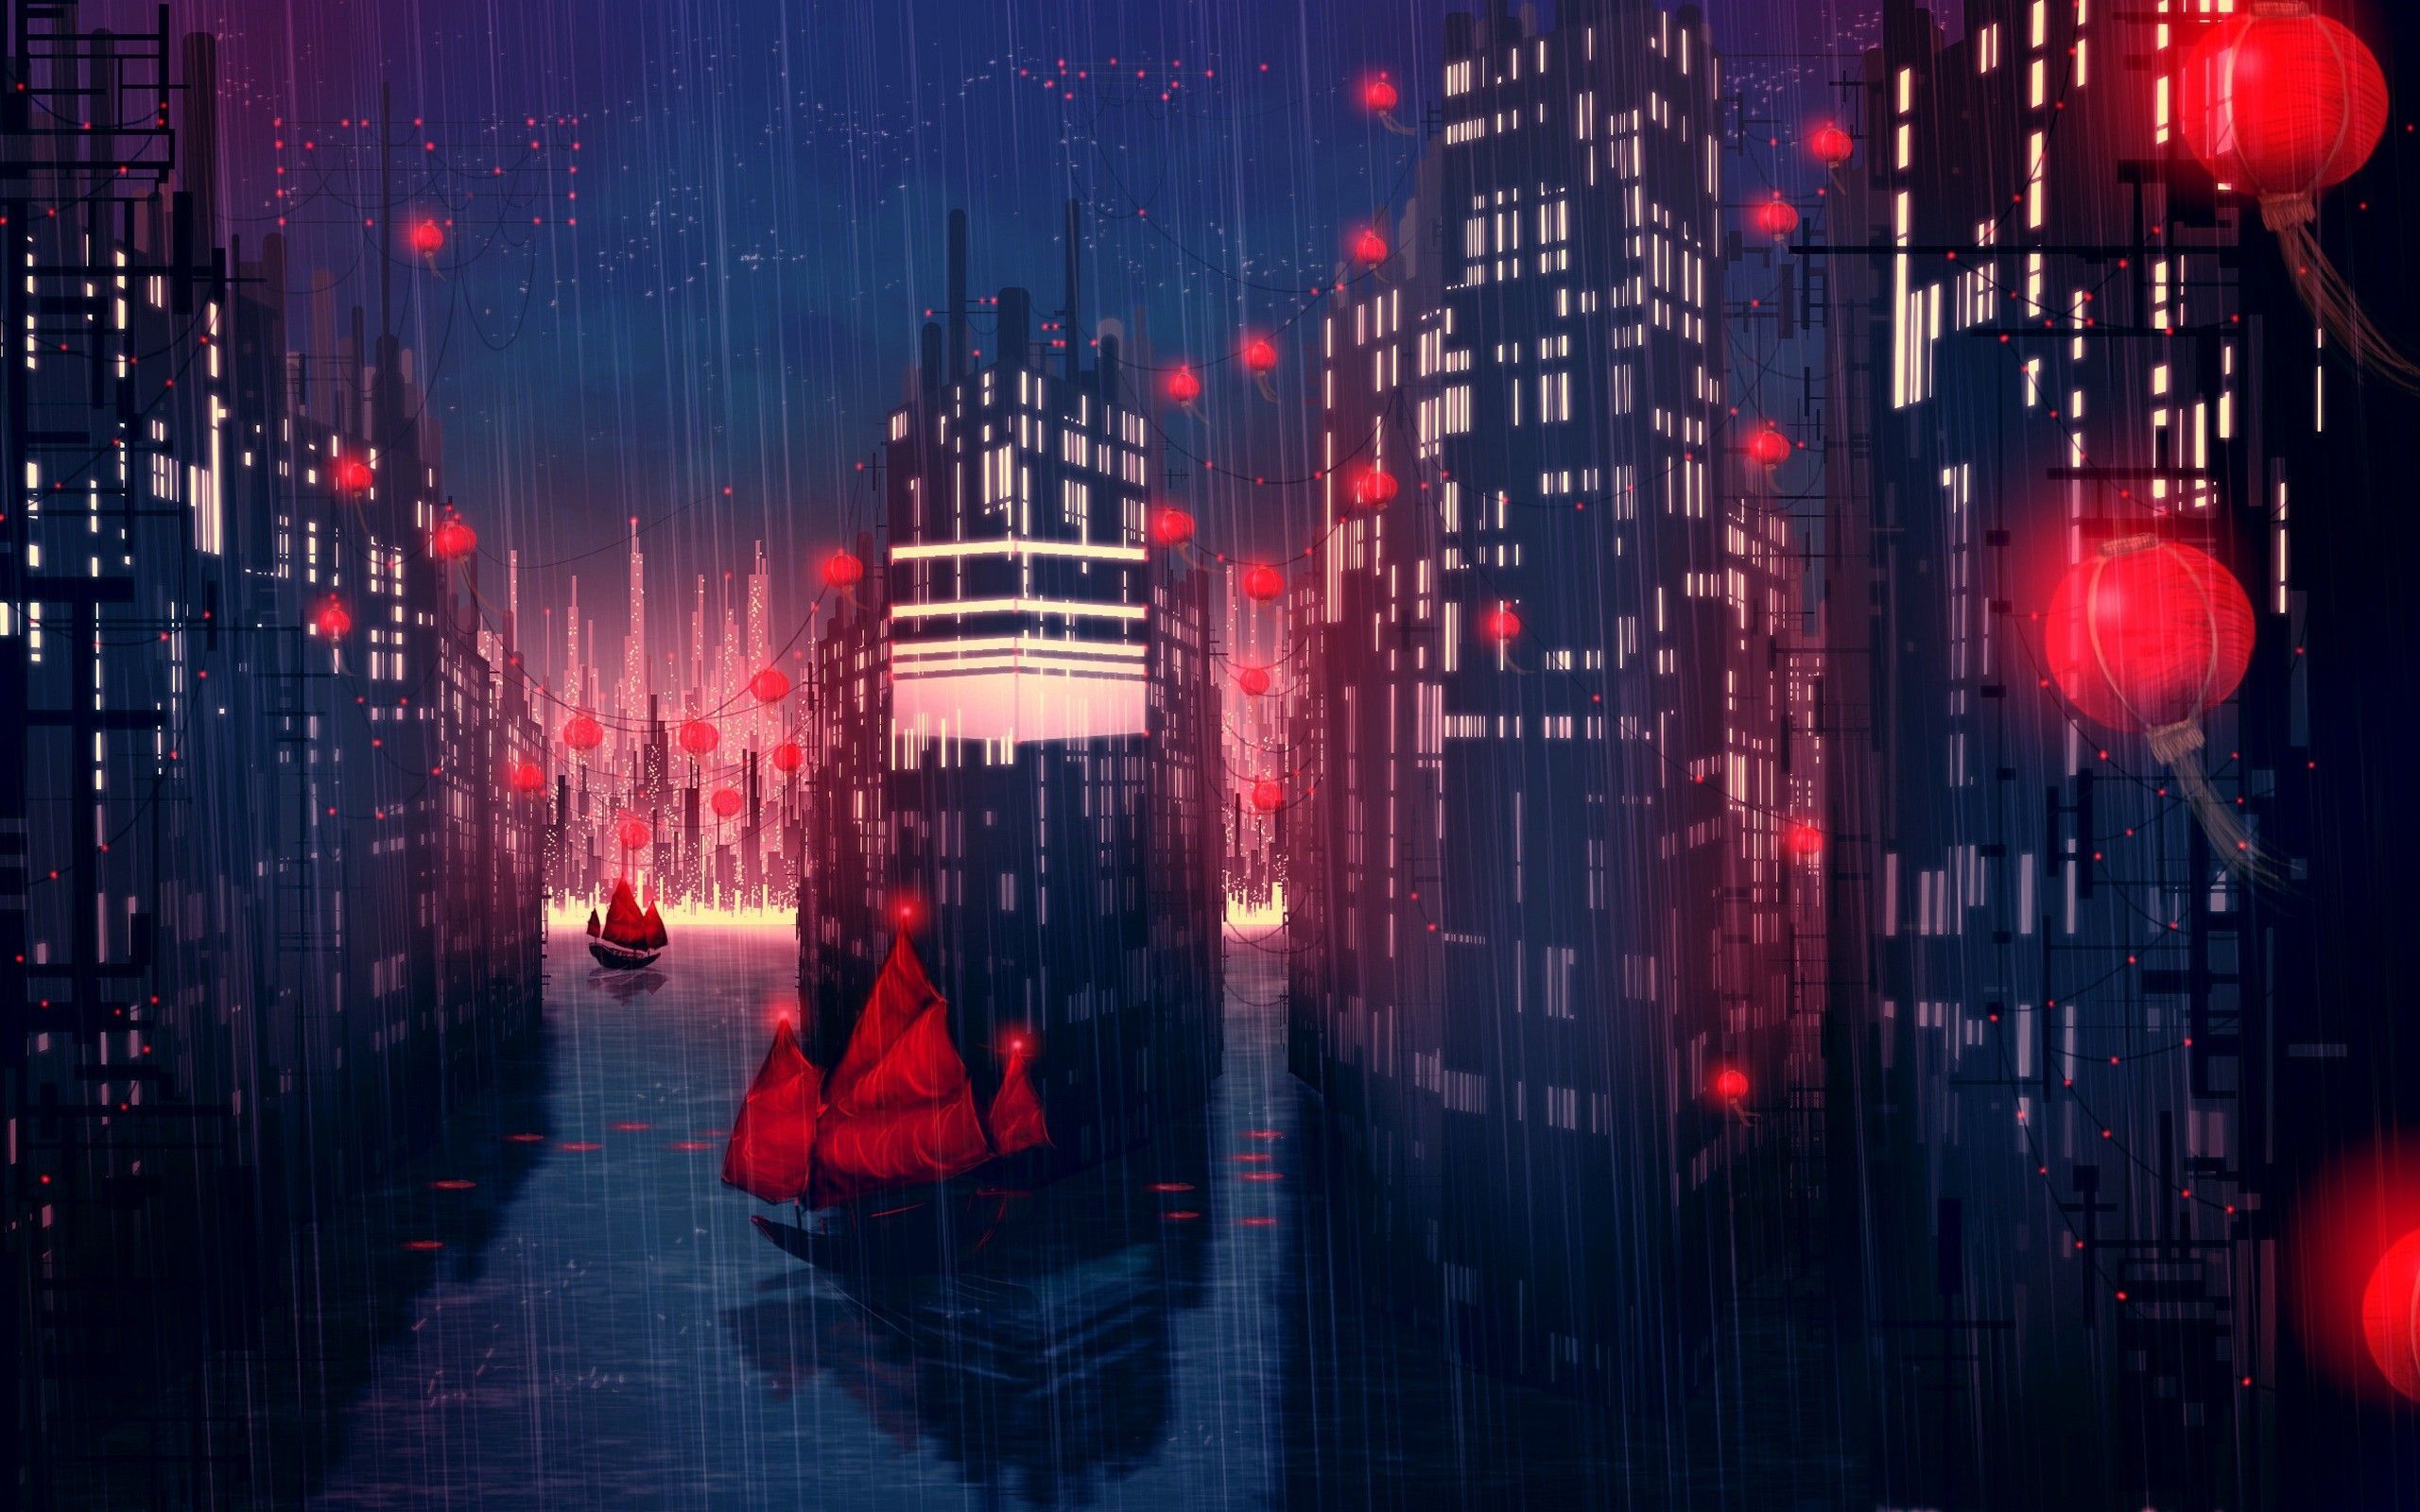 Anime City Night Scenery Wallpapers